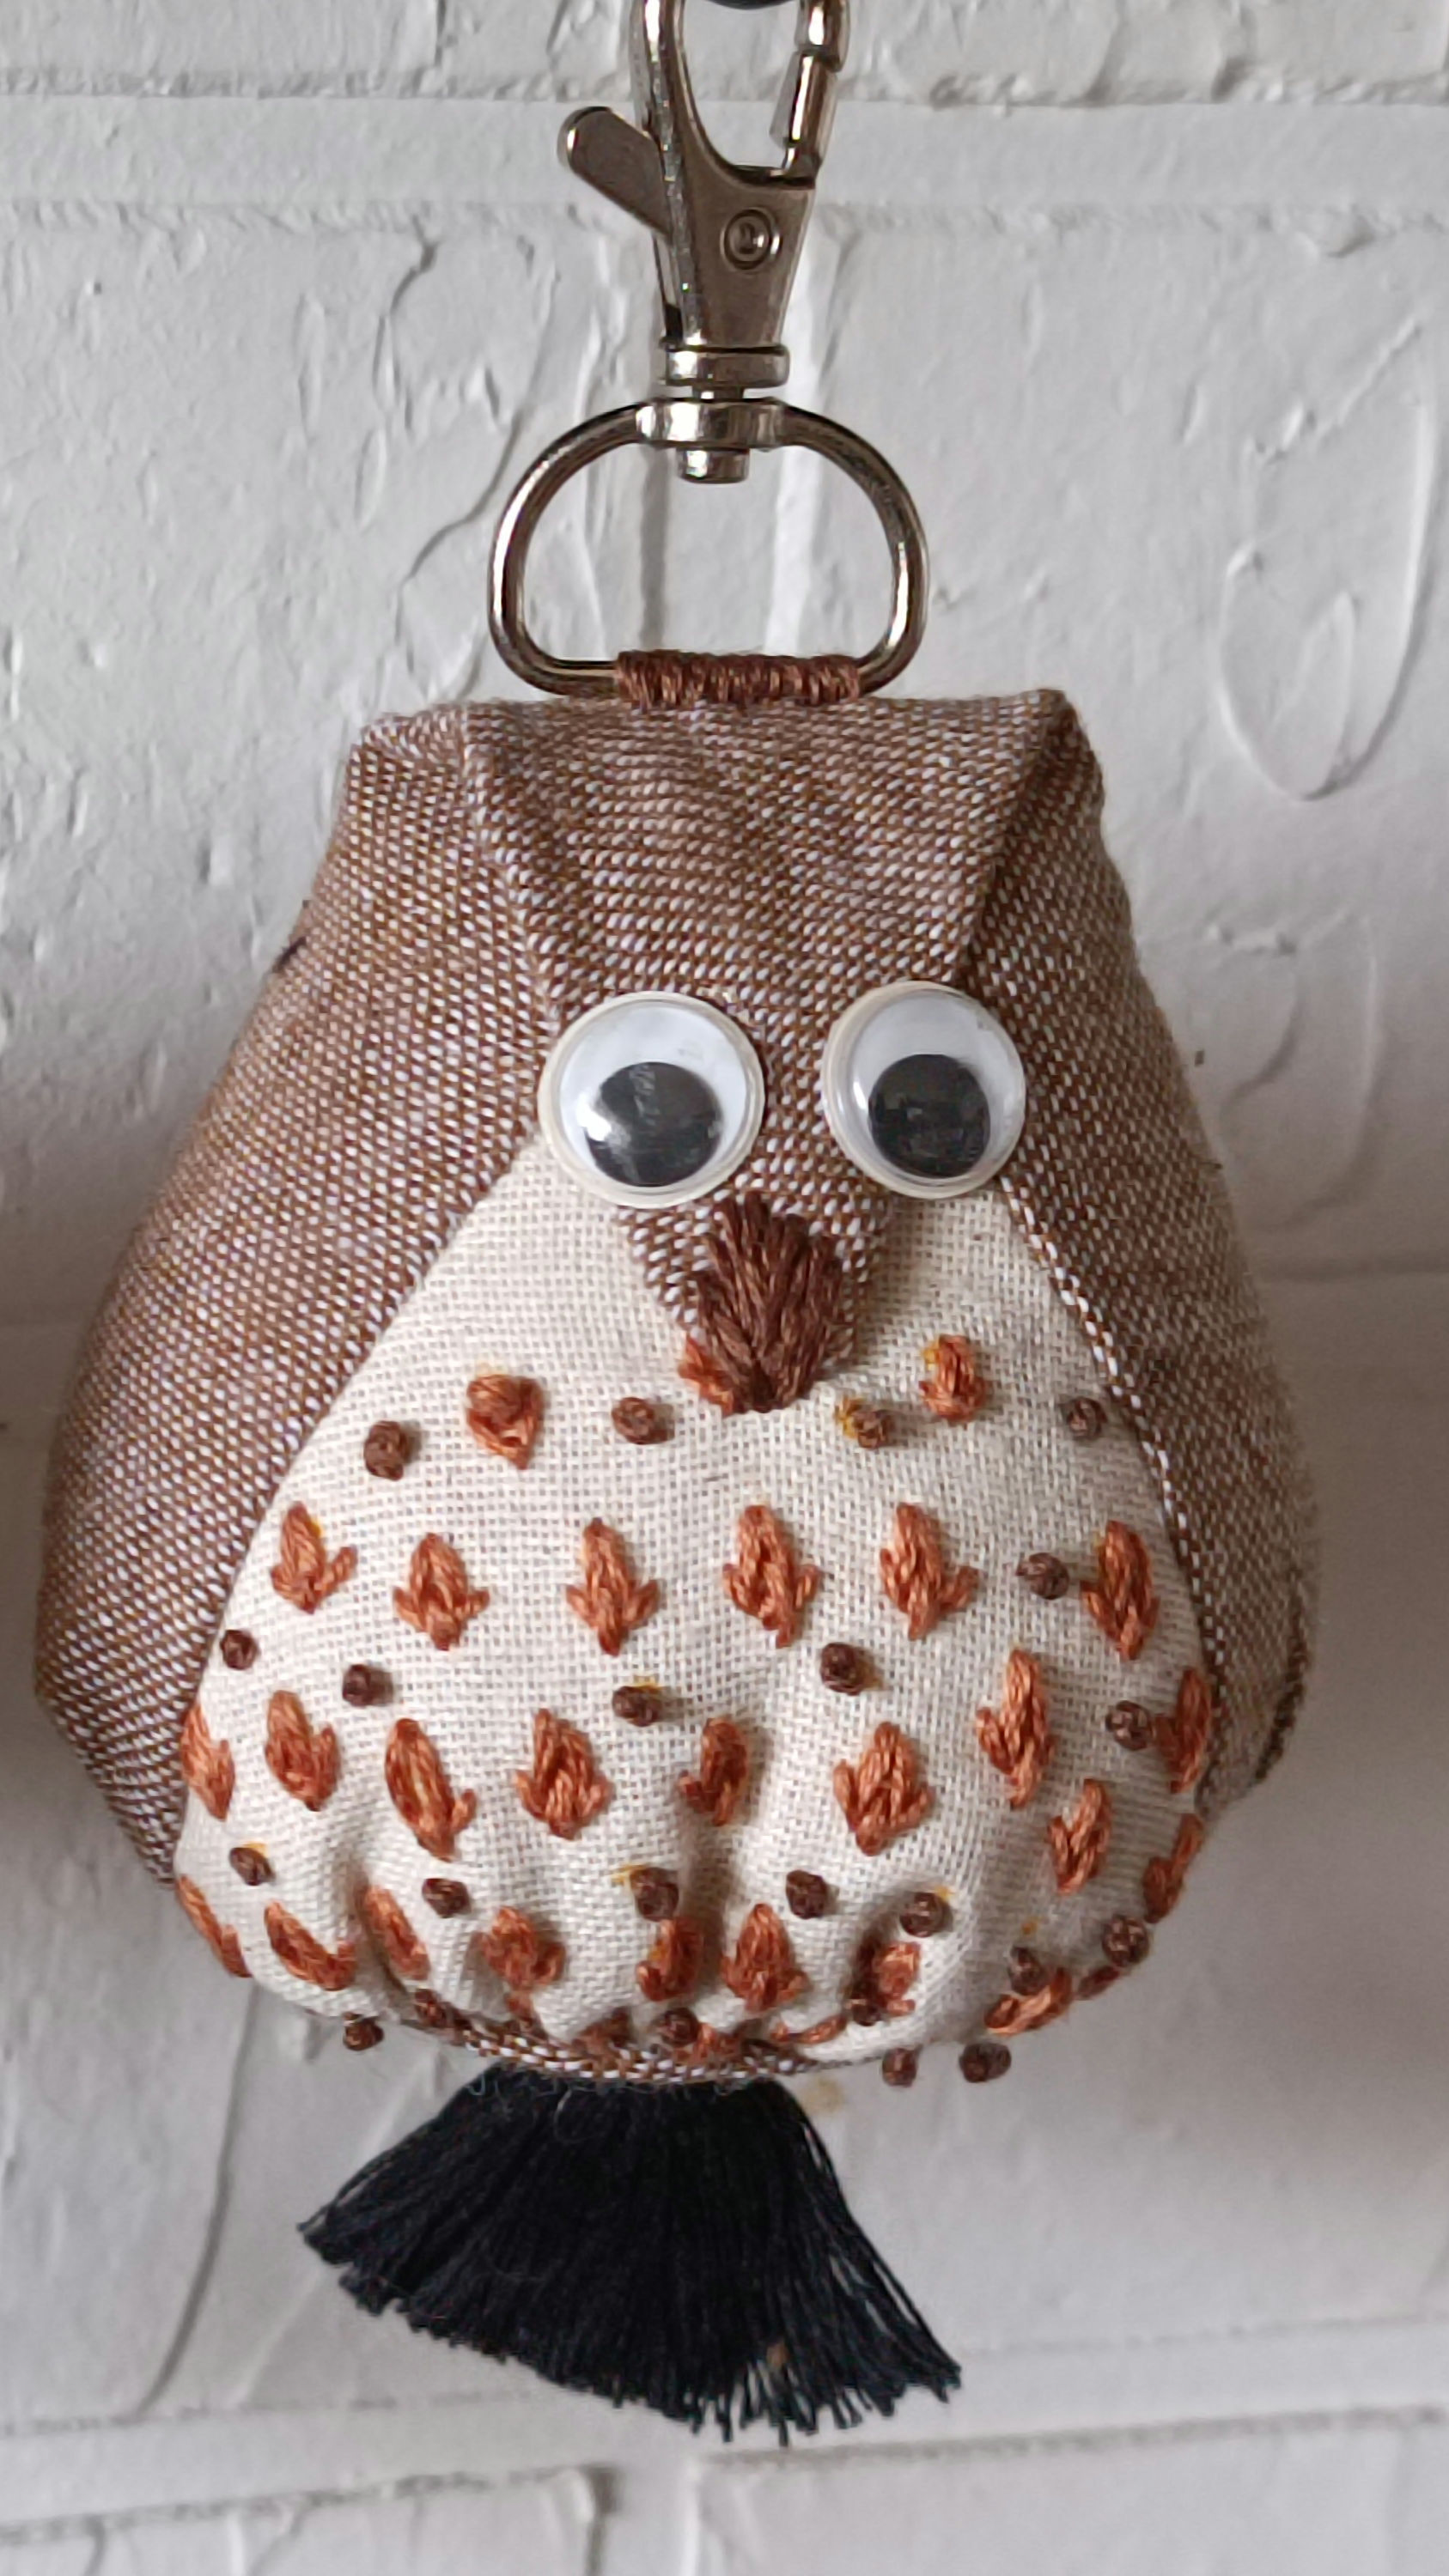 Handmade fabric owl keychain/purse charm ready for sale. 